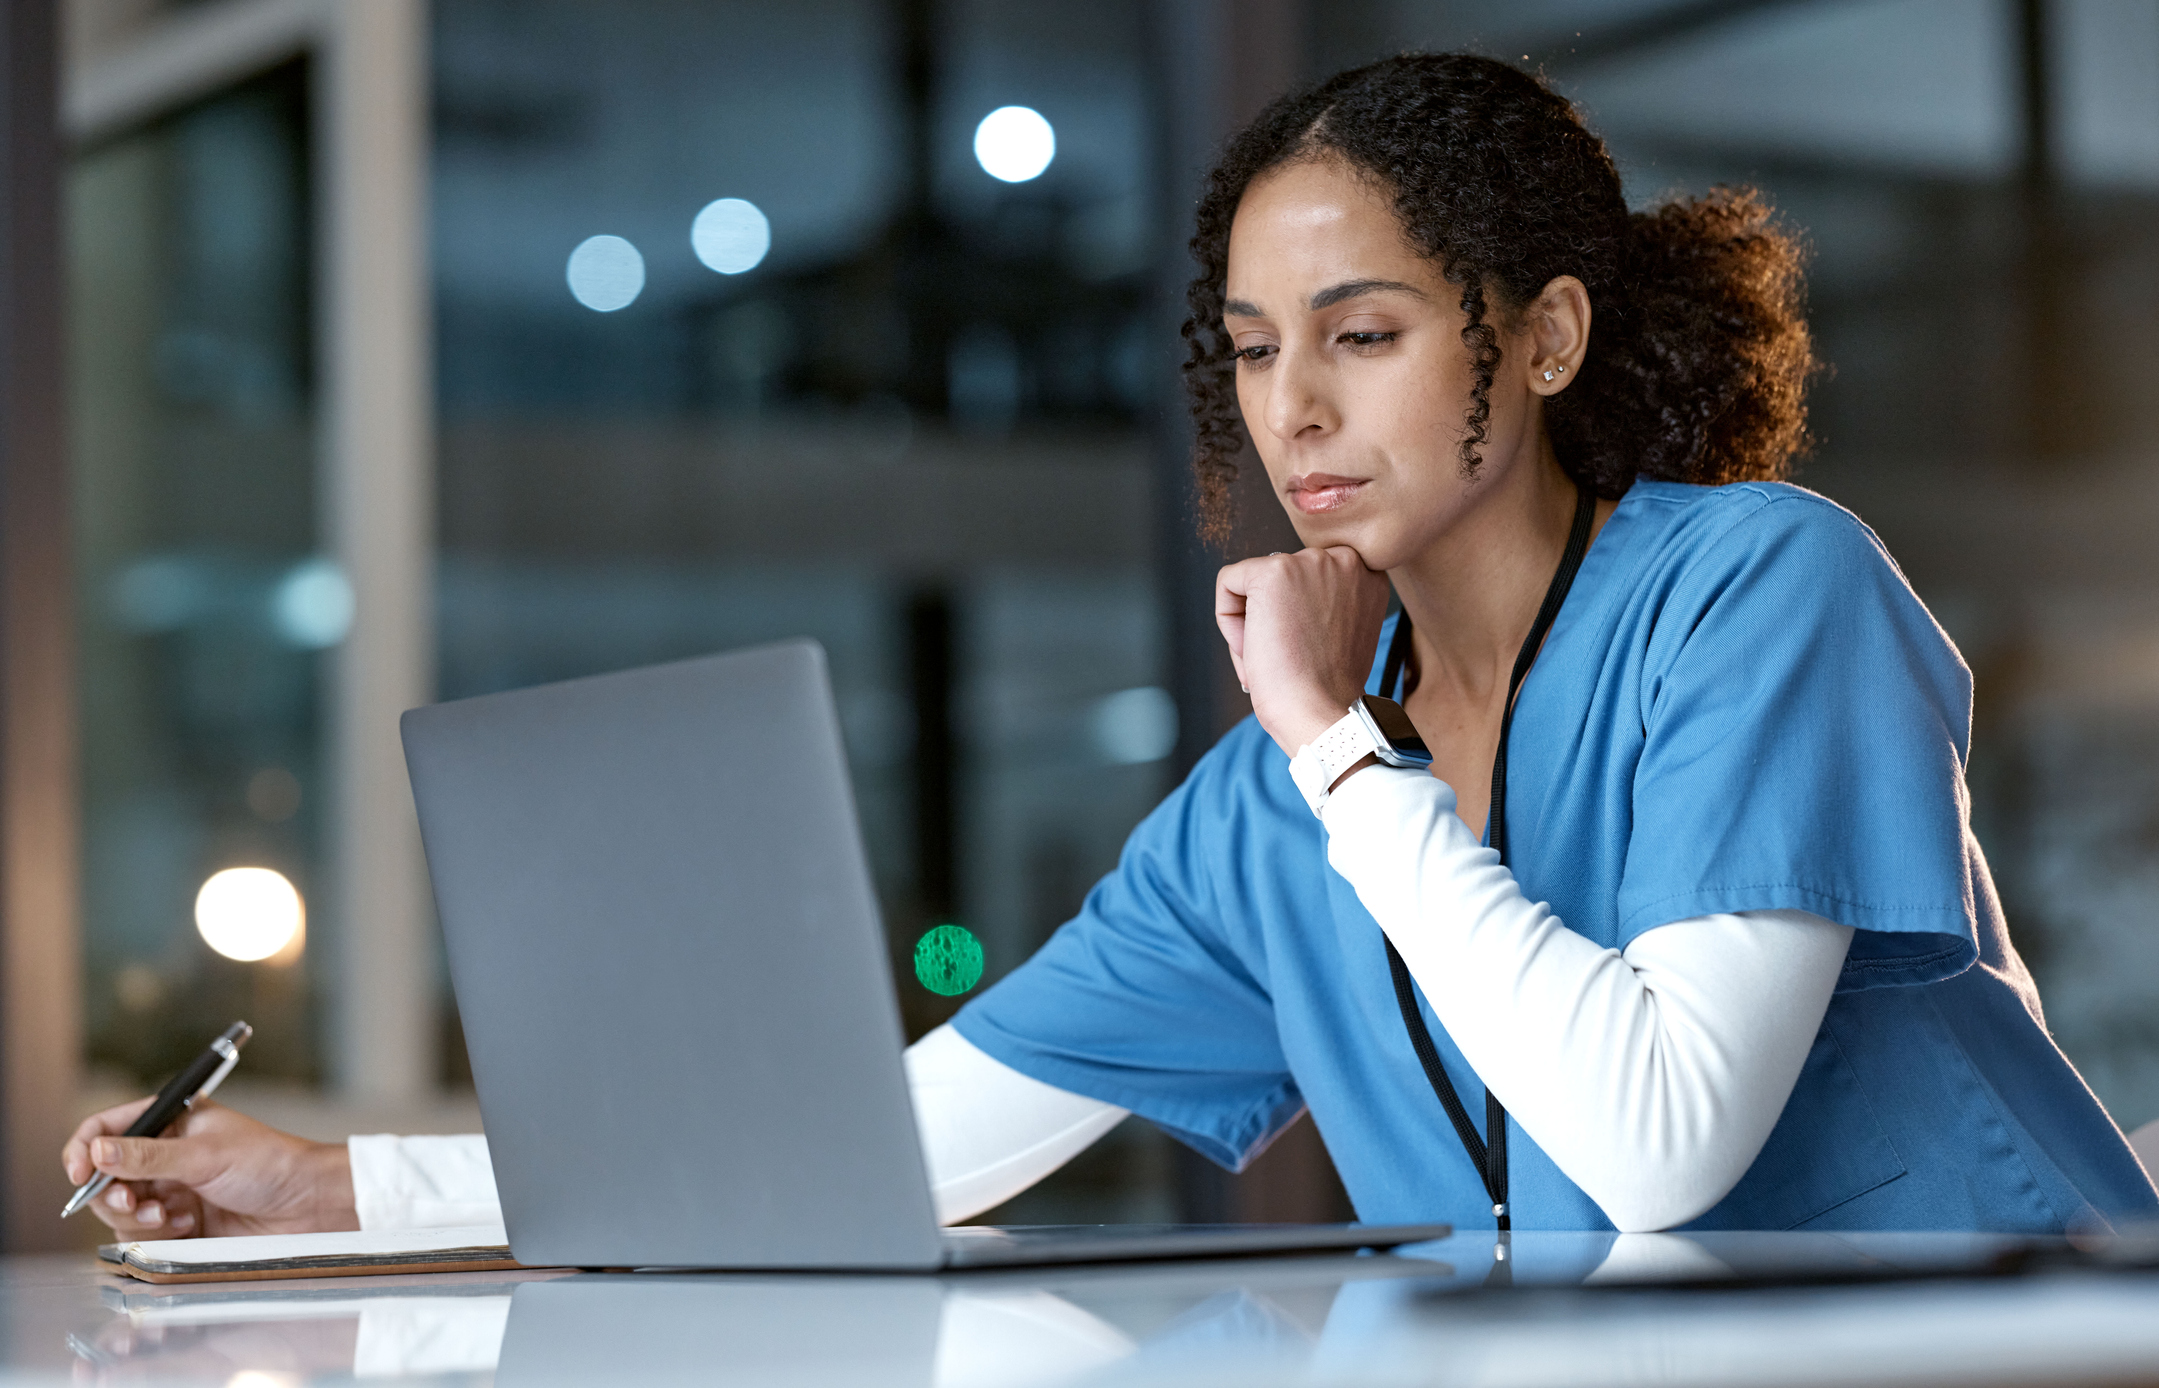 Nurse studying on laptop at night